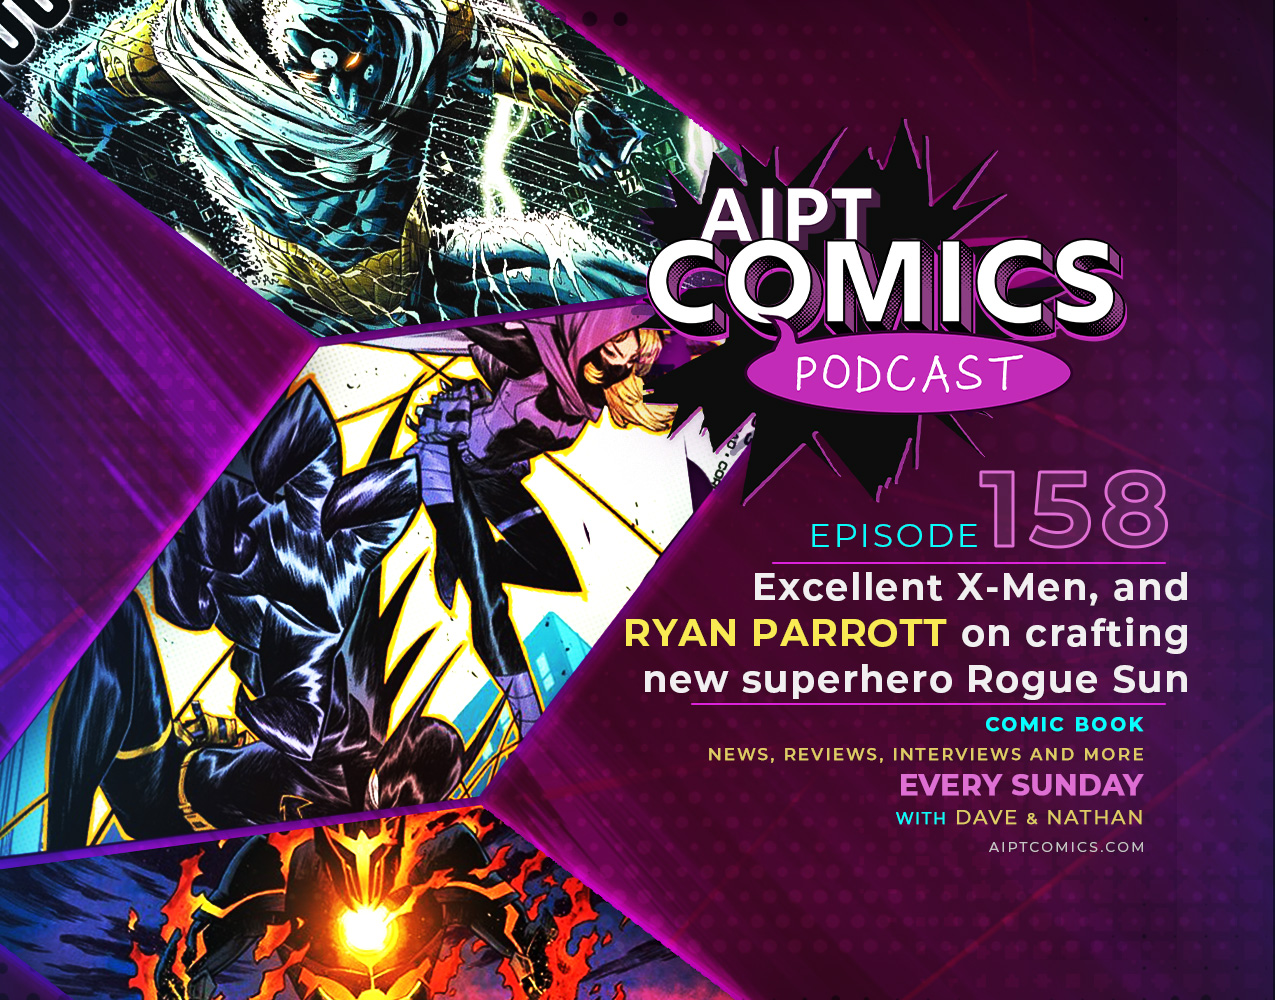 AIPT Comics Podcast Episode 158: Guest Ryan Parrott talks creating new superhero 'Rogue Sun'